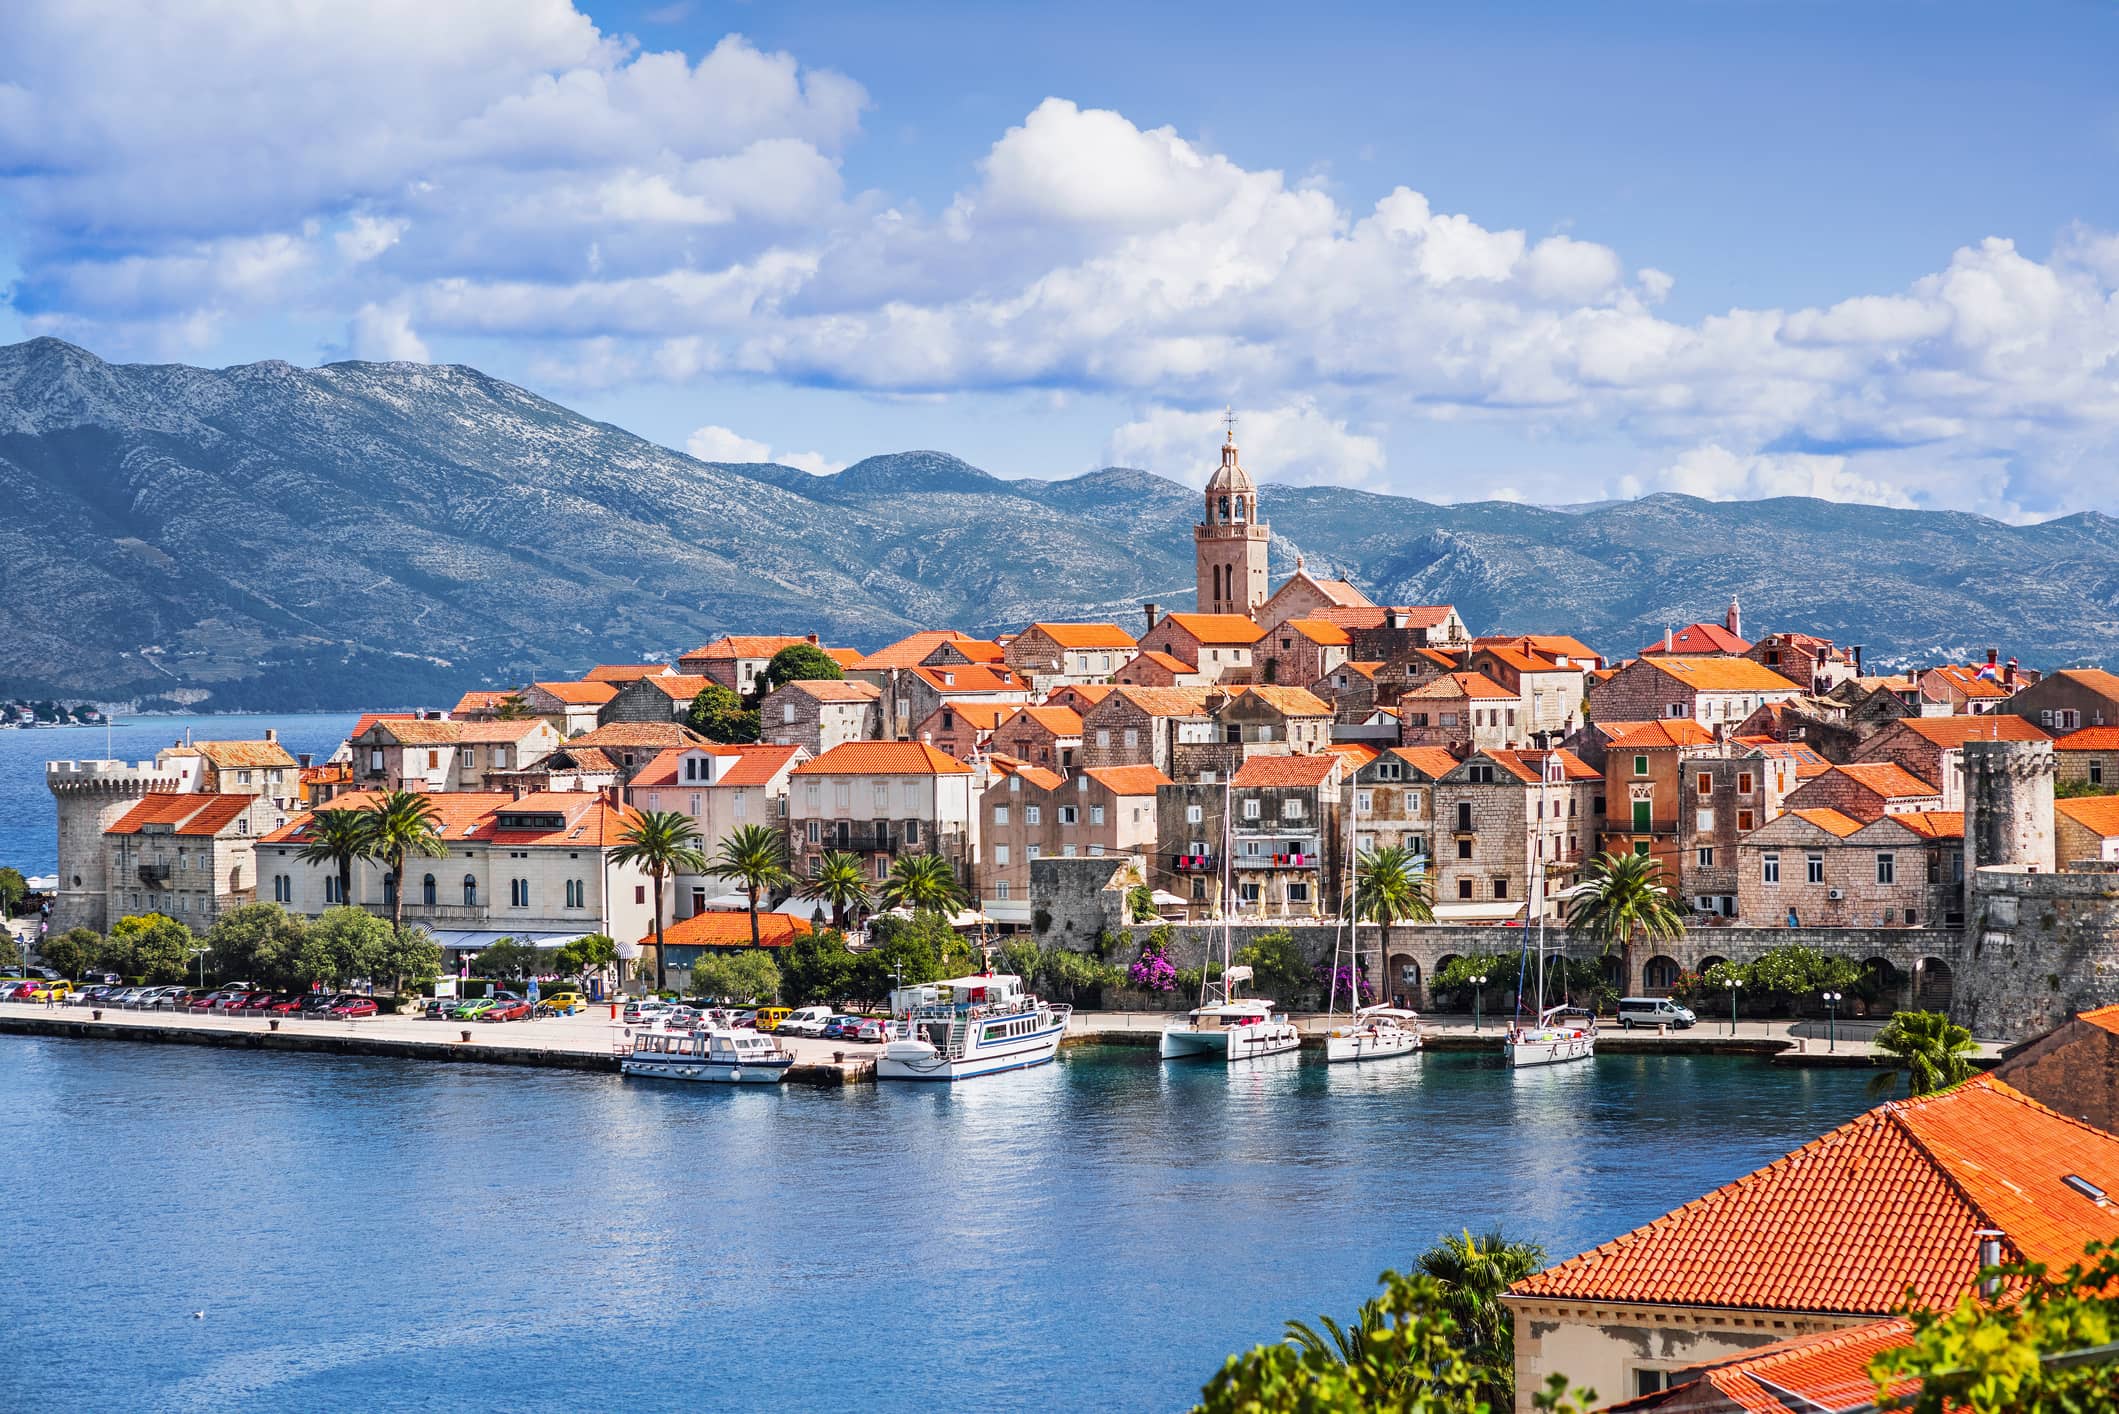 korcula town in the adriatic sea, croatia